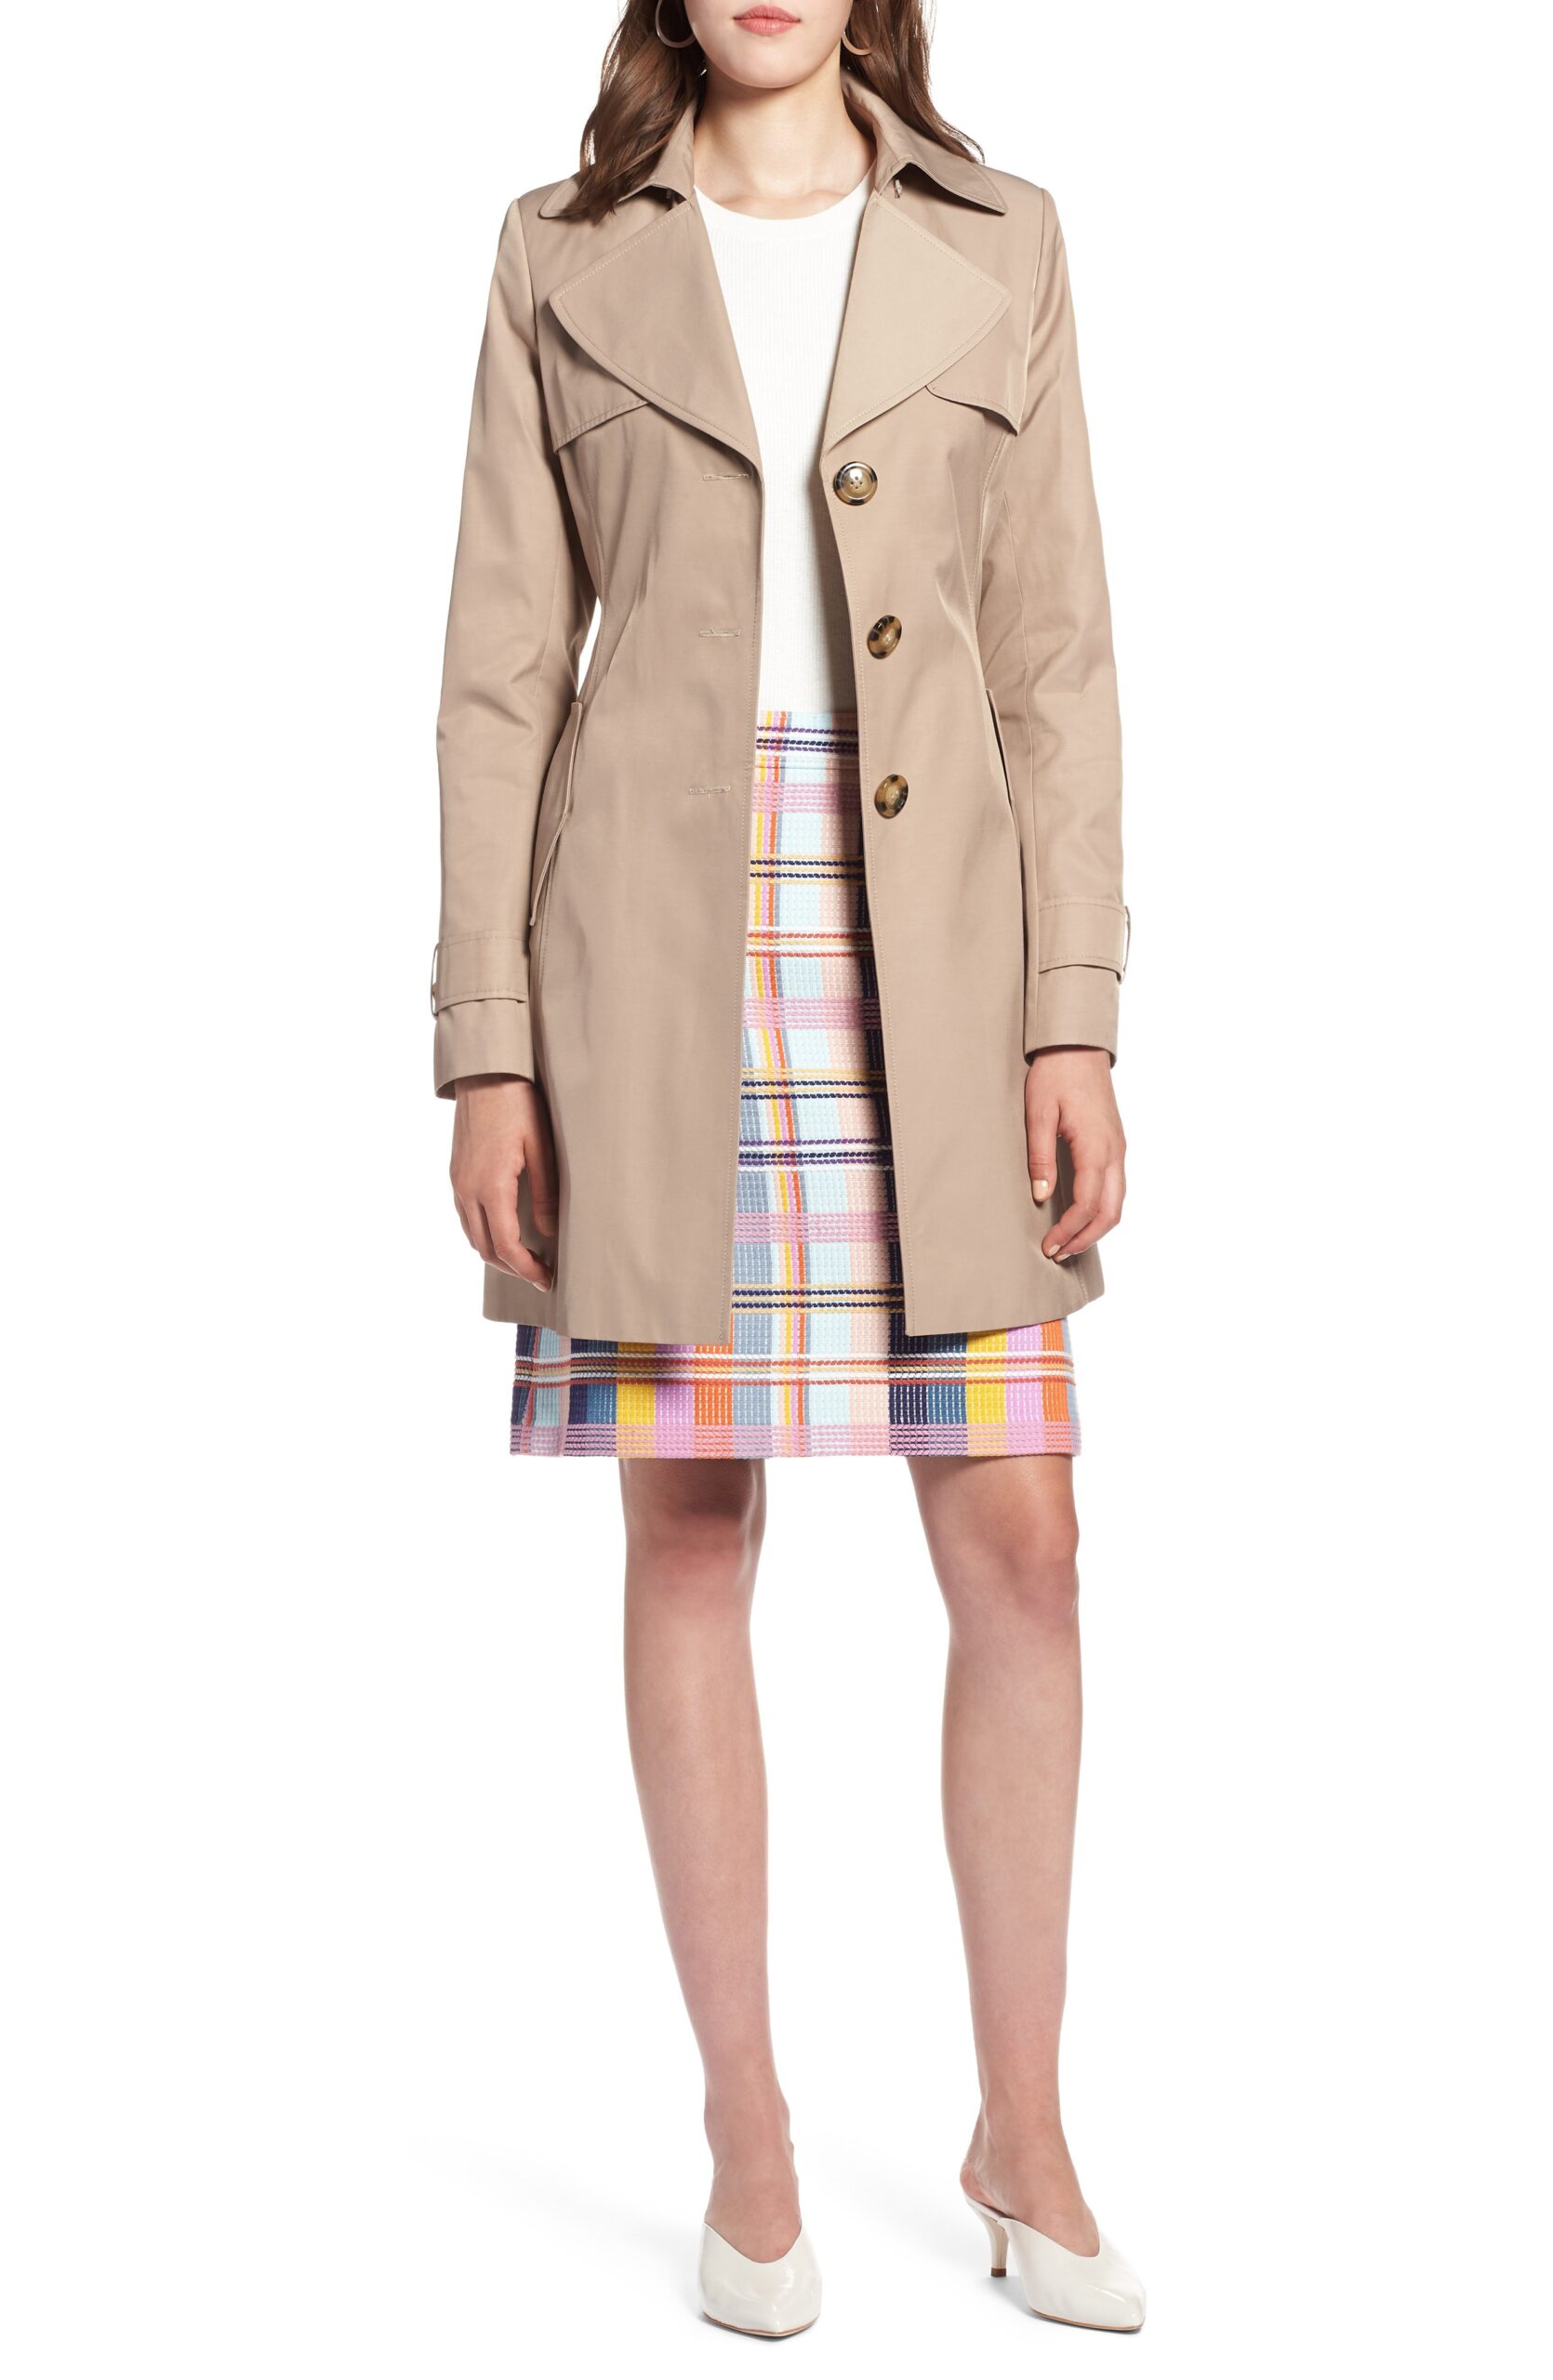 The evergreen fashion staple: Beige coats